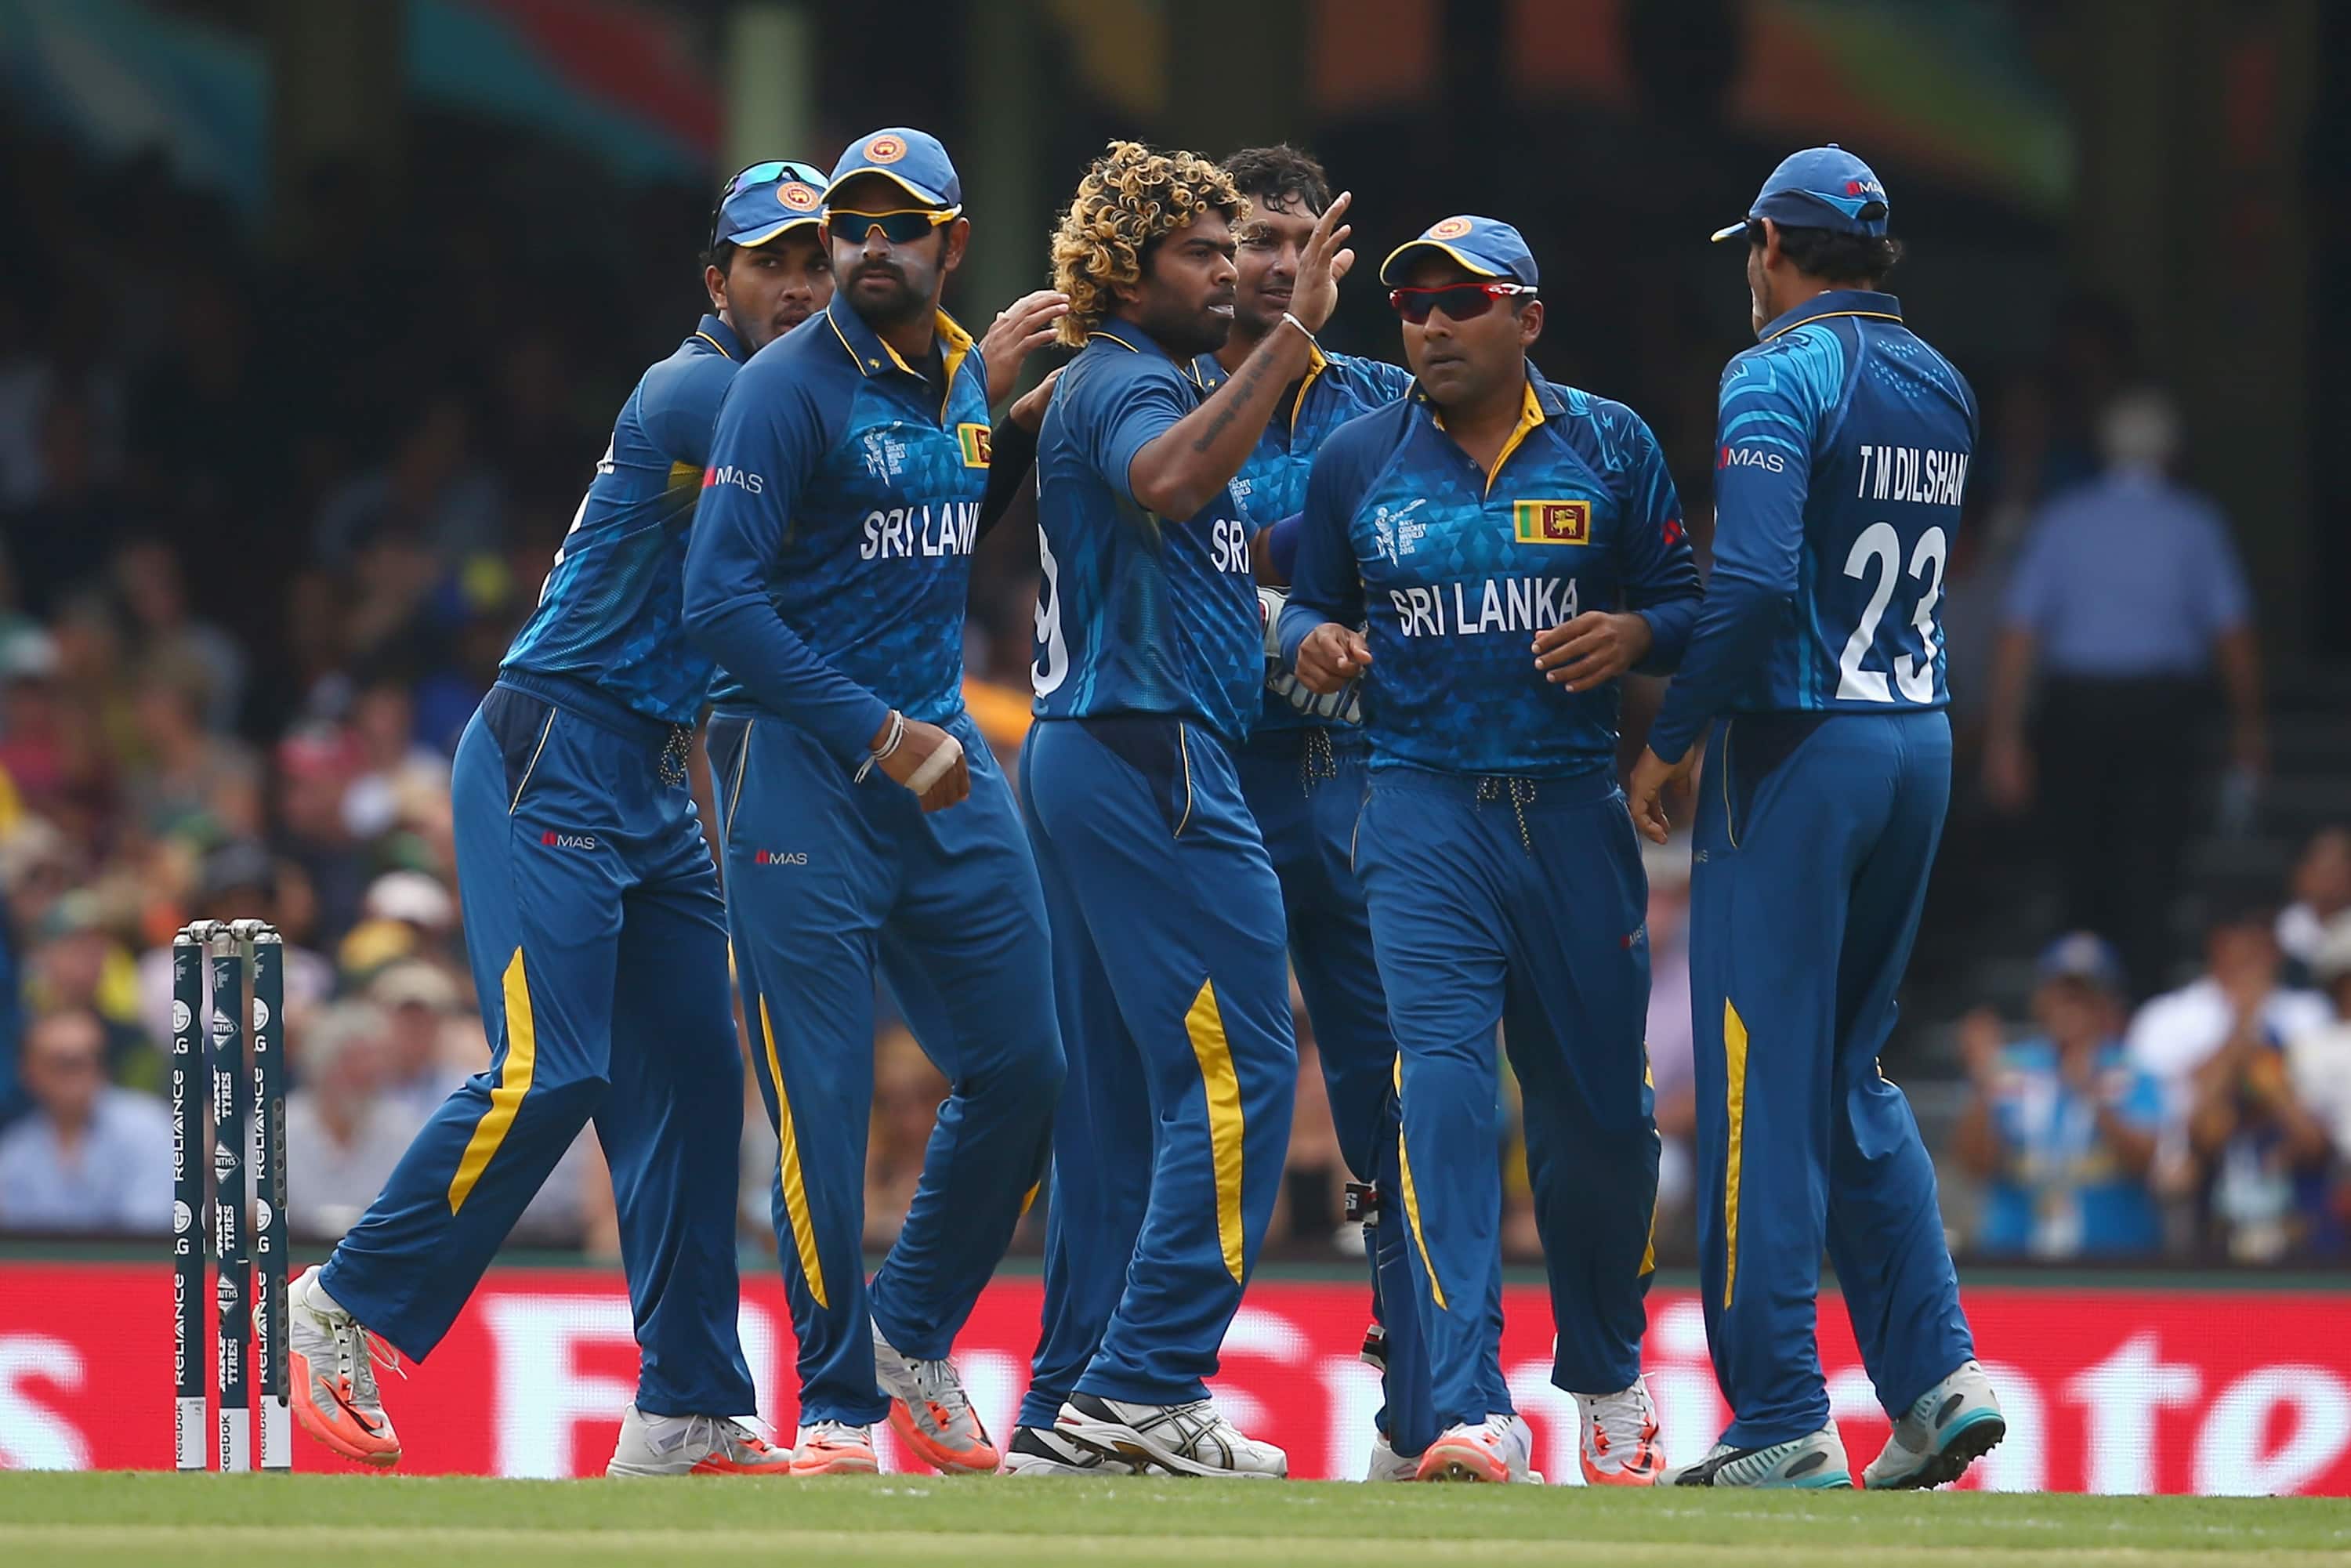 Sri Lanka vs Scotland, ICC Cricket World Cup 2015: 5 match facts - Cricket Country